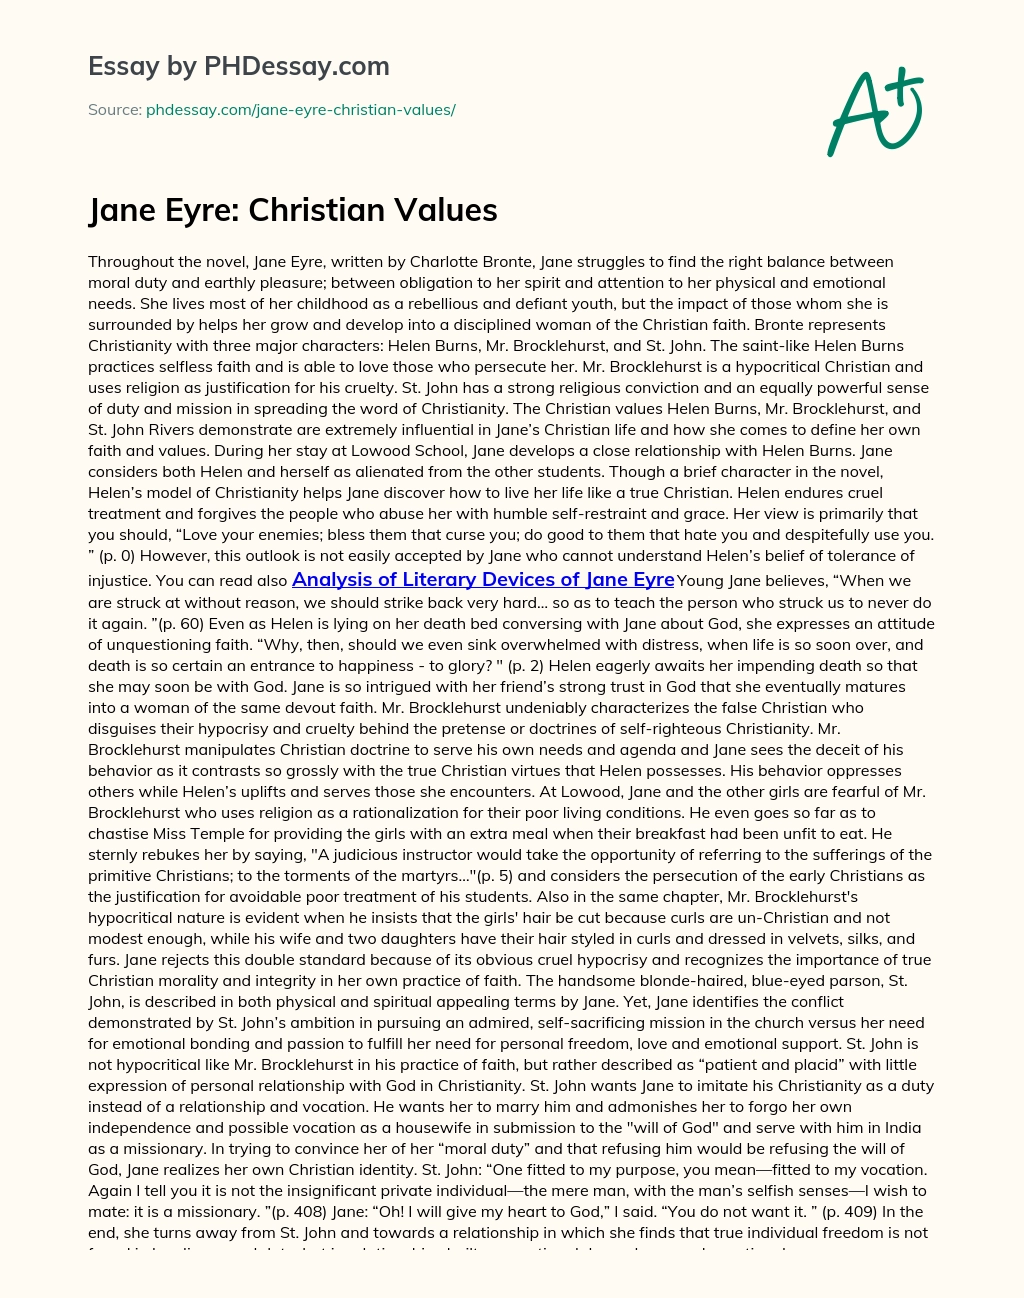 christian values essay